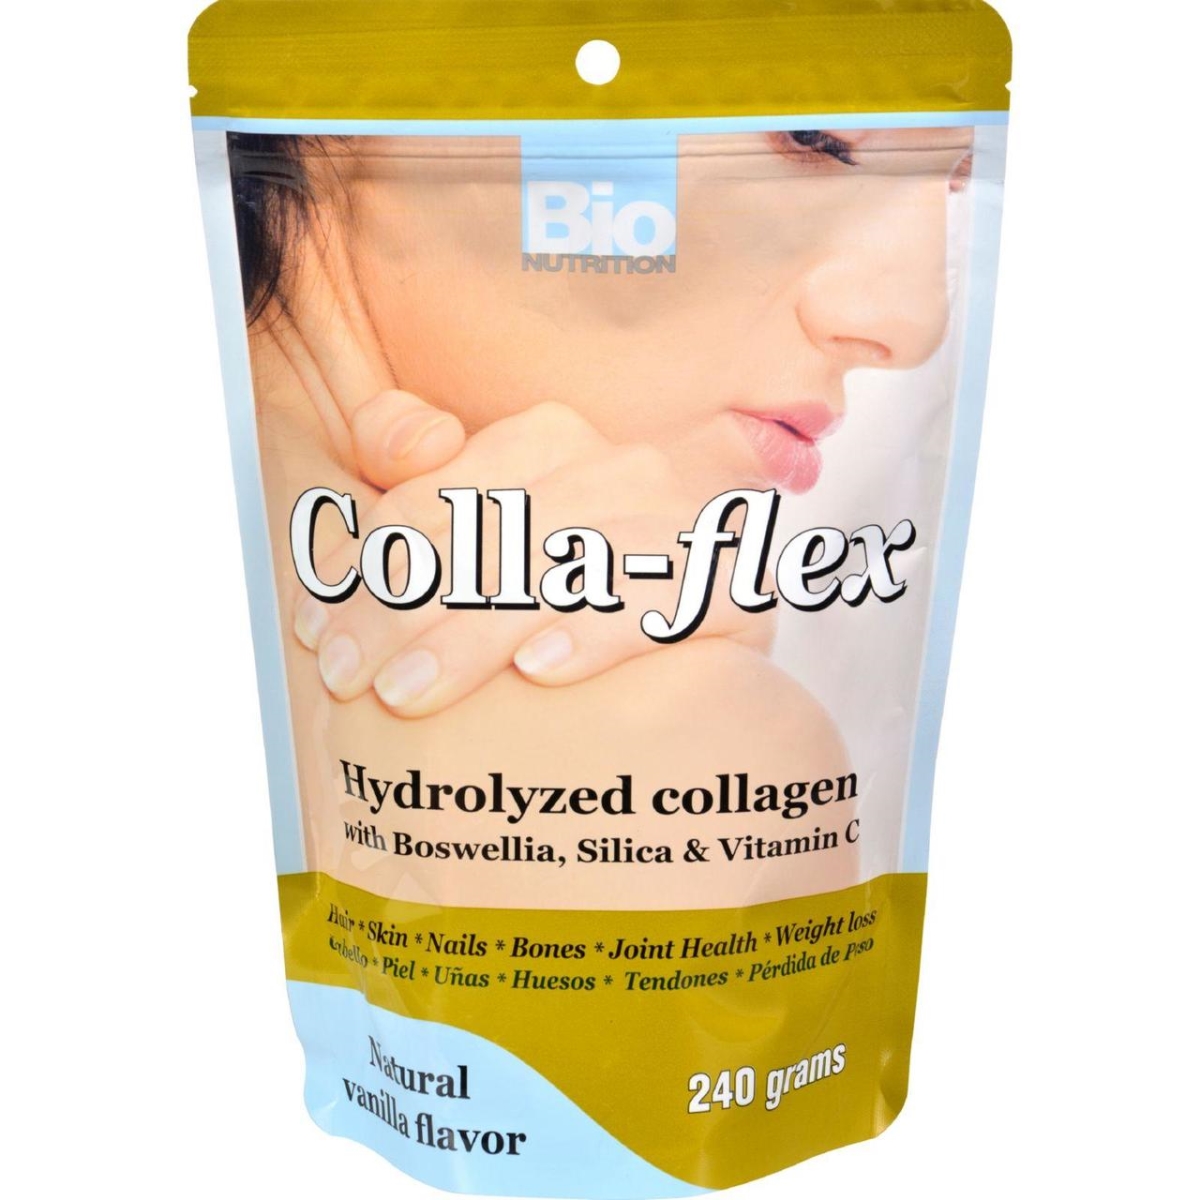 Bio Nutrition Hg1086065 240g Colla-flex Hydrolyzed Collagen Natural Vanilla